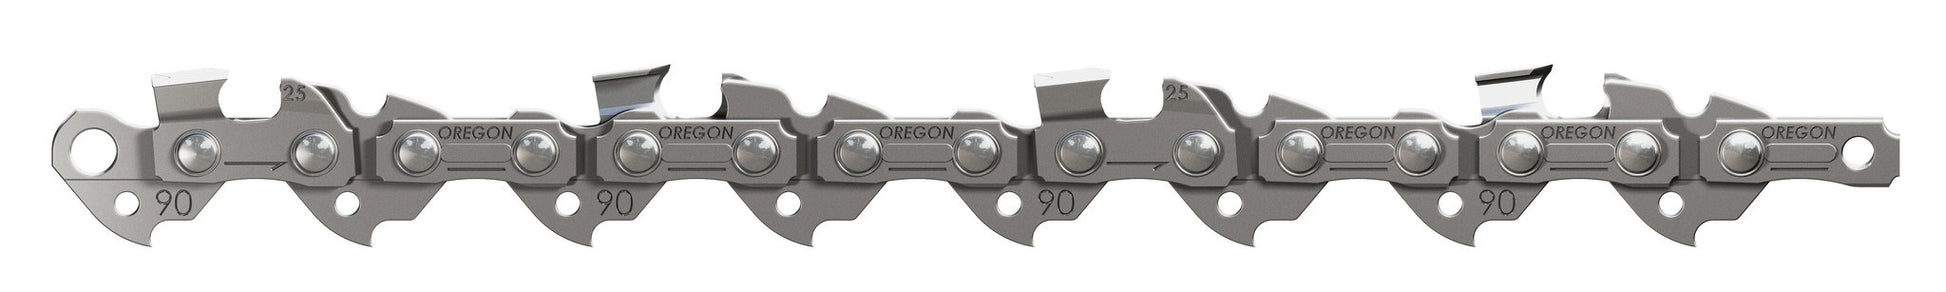 90PX057E - Oregon 90PX Chainsaw Chain - 57 Drive Links - NewSawChains